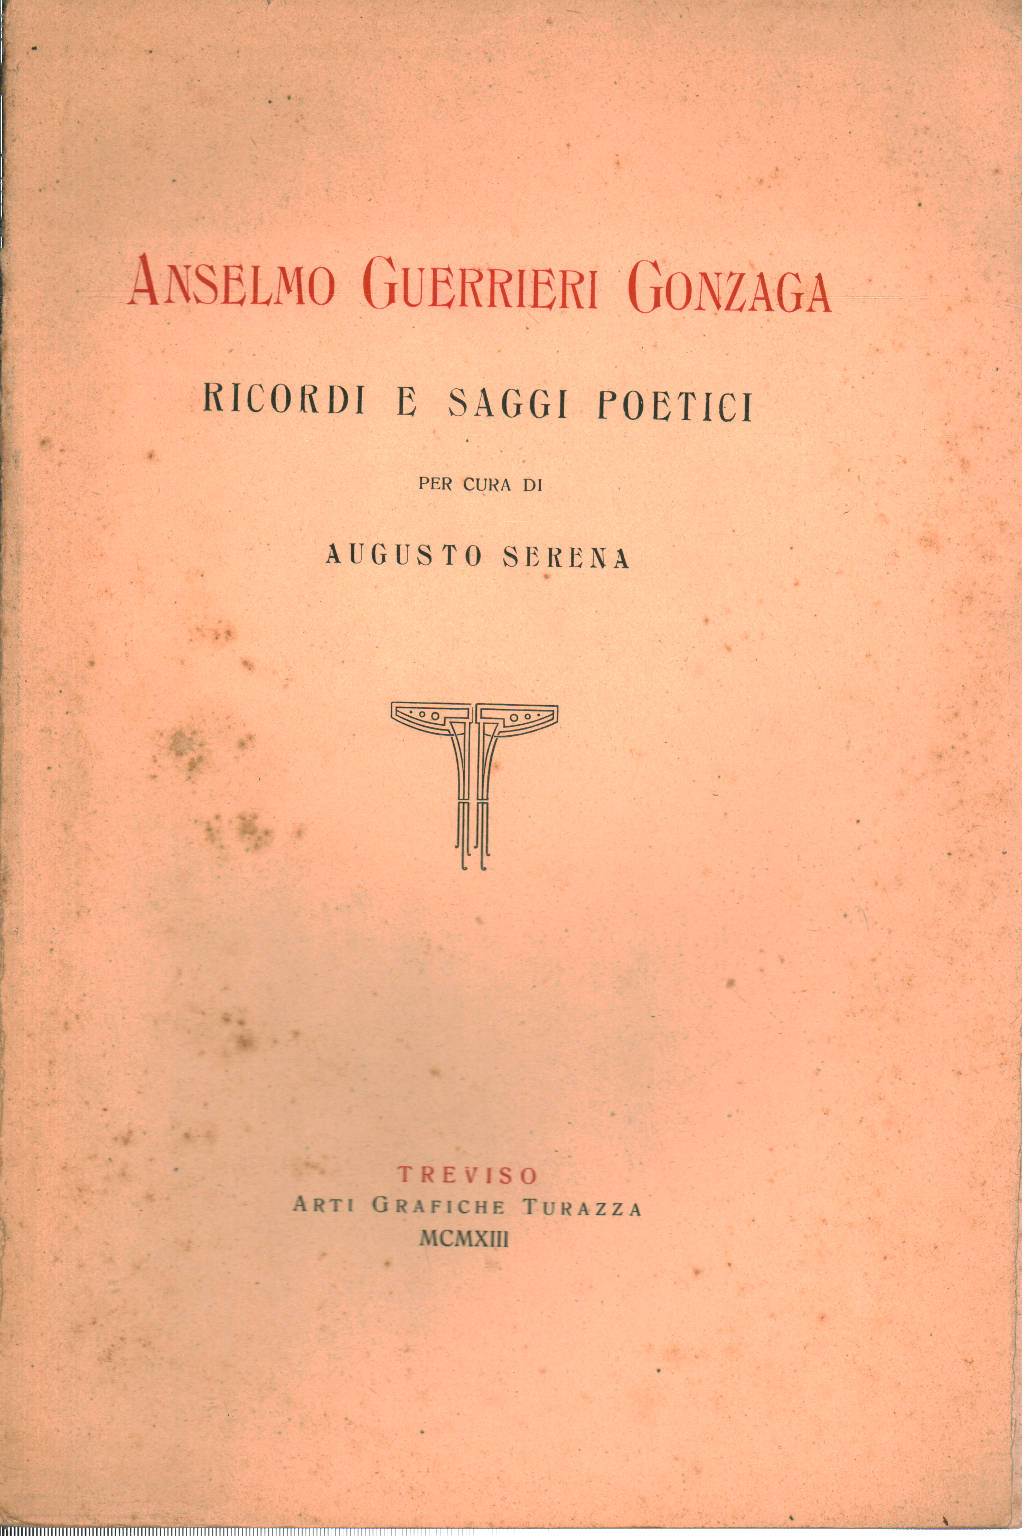 Ricordi e saggi poetici, Anselmo Guerrieri Gonzaga